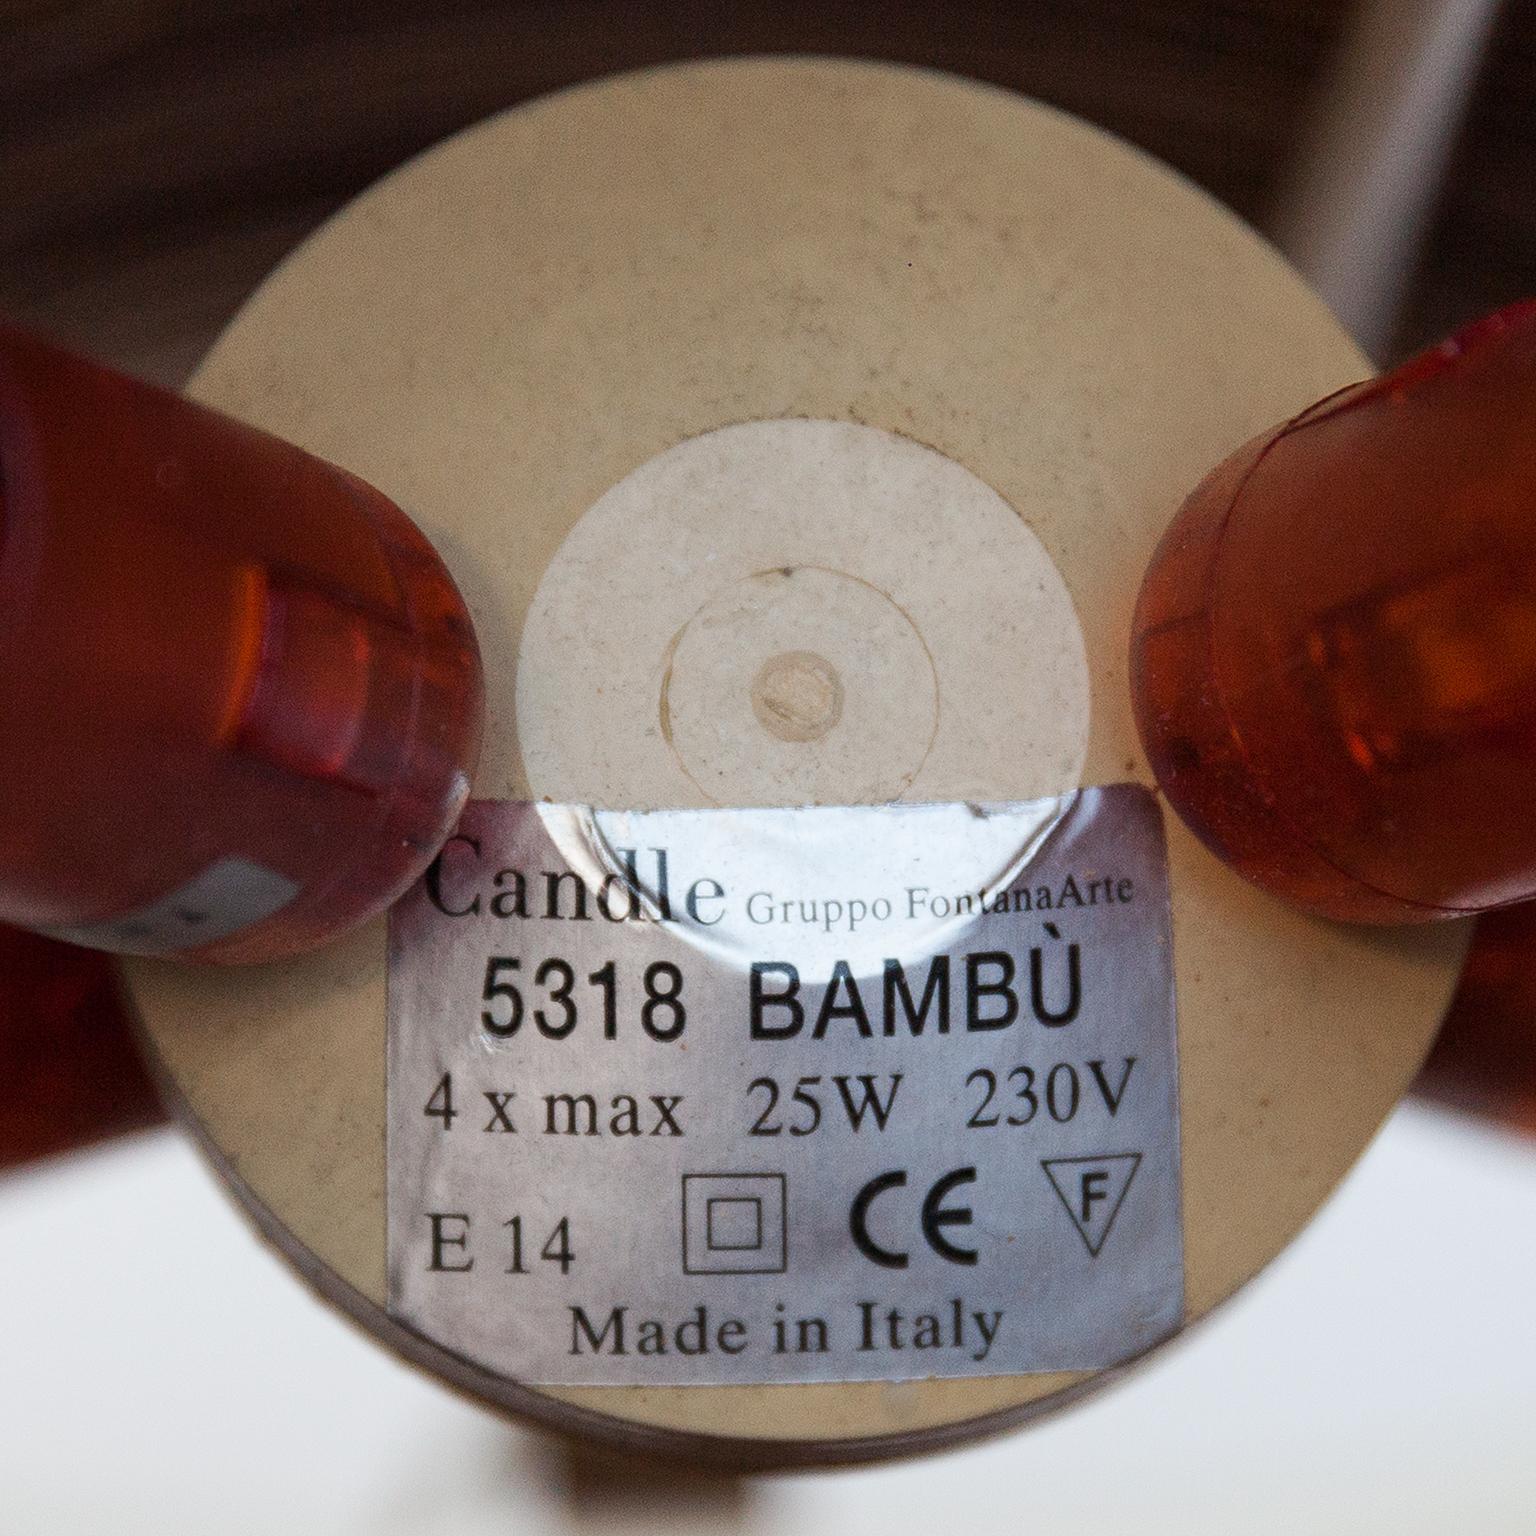 Candle “Bambu” Table Lamp Campana Brothers by Fontana Arte, 2000 1